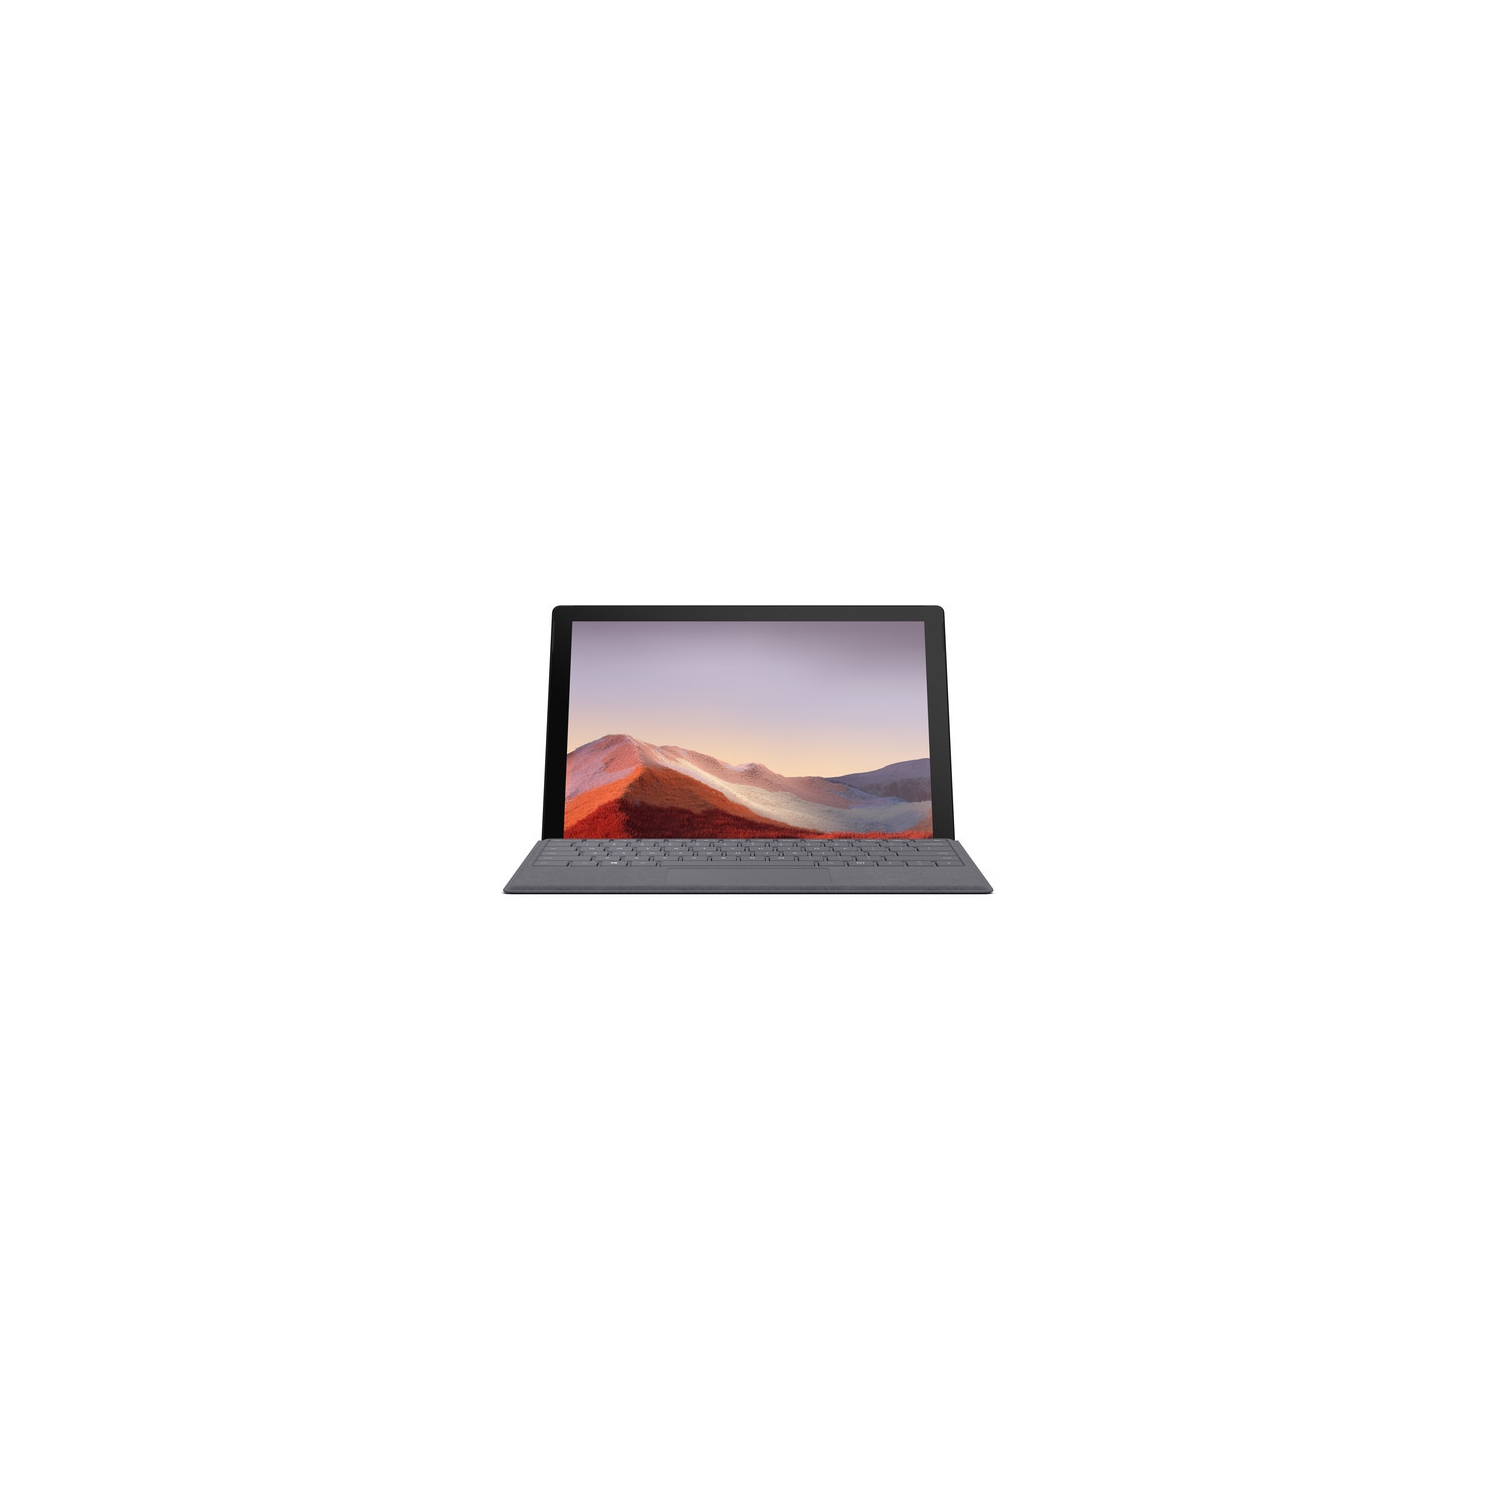 Open Box - Microsoft Surface Pro 7 12.3" Windows 10 Tablet -Matte Black (Intel Core i5/8 GB RAM/ 256 GB/ Win 10 Home)